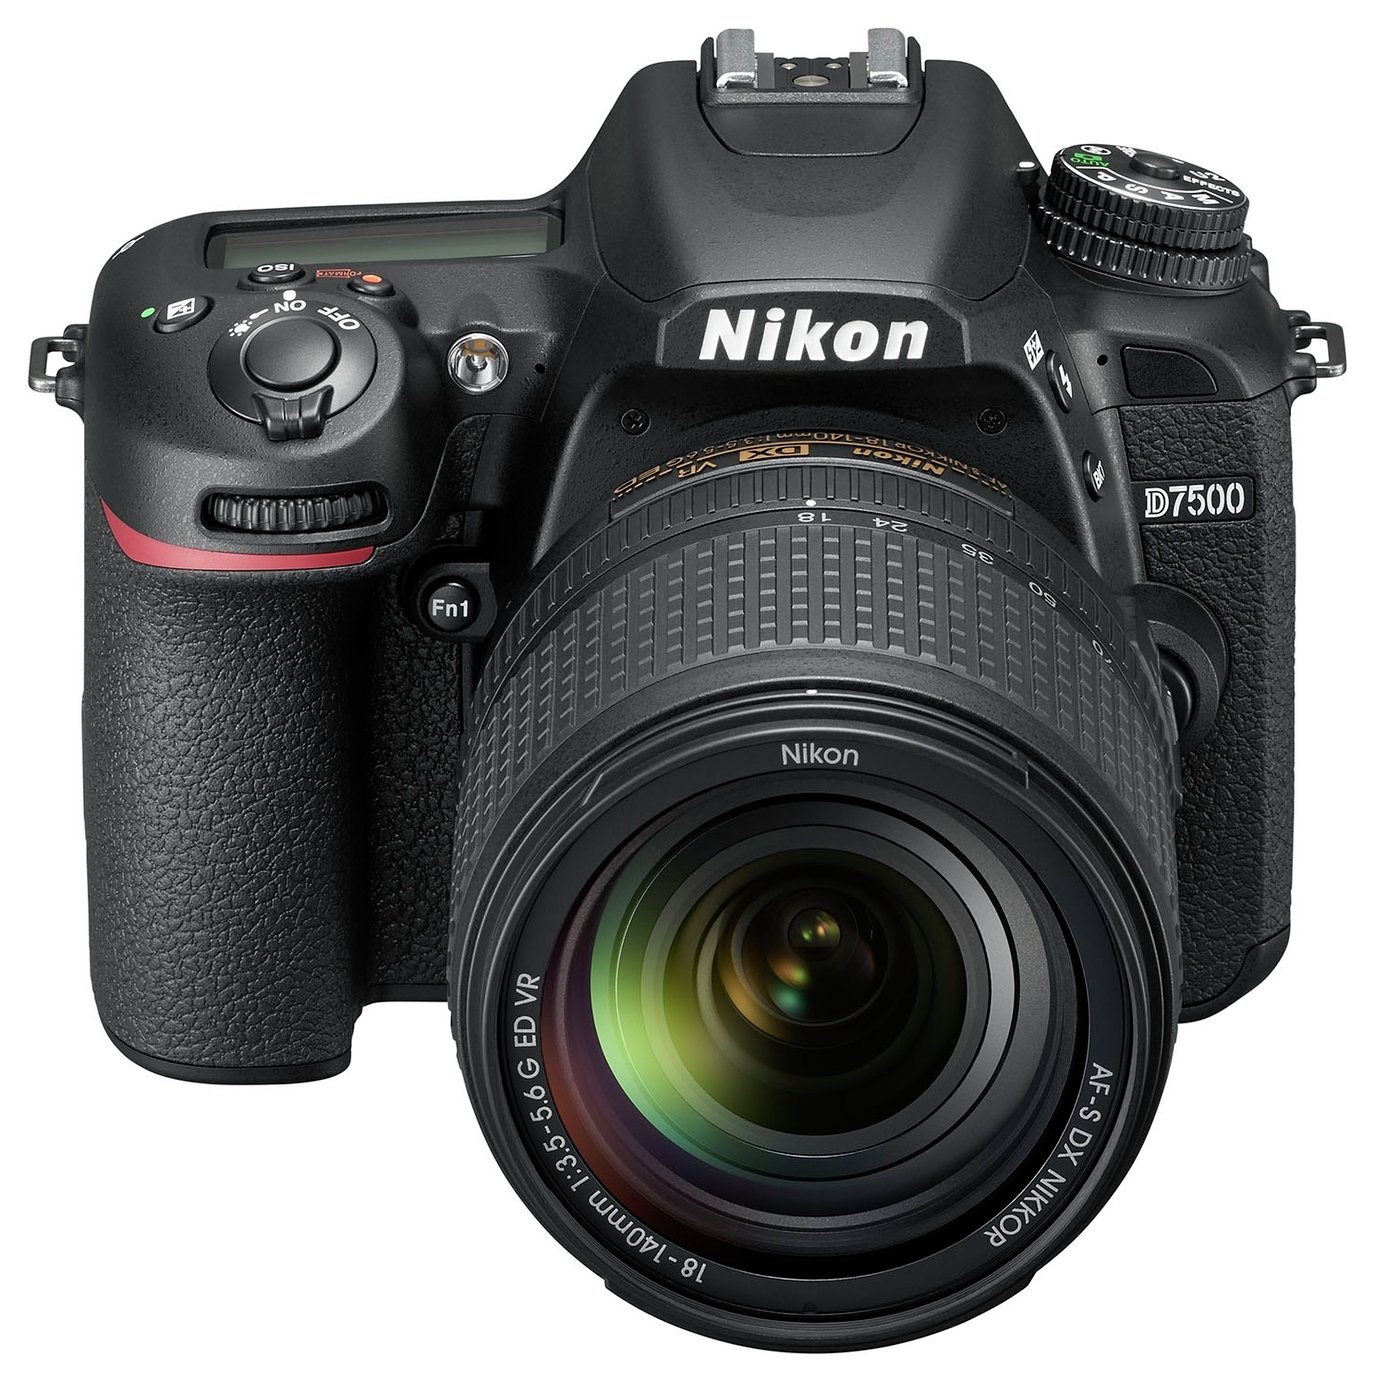 Nikon D7500 Camera Body Review